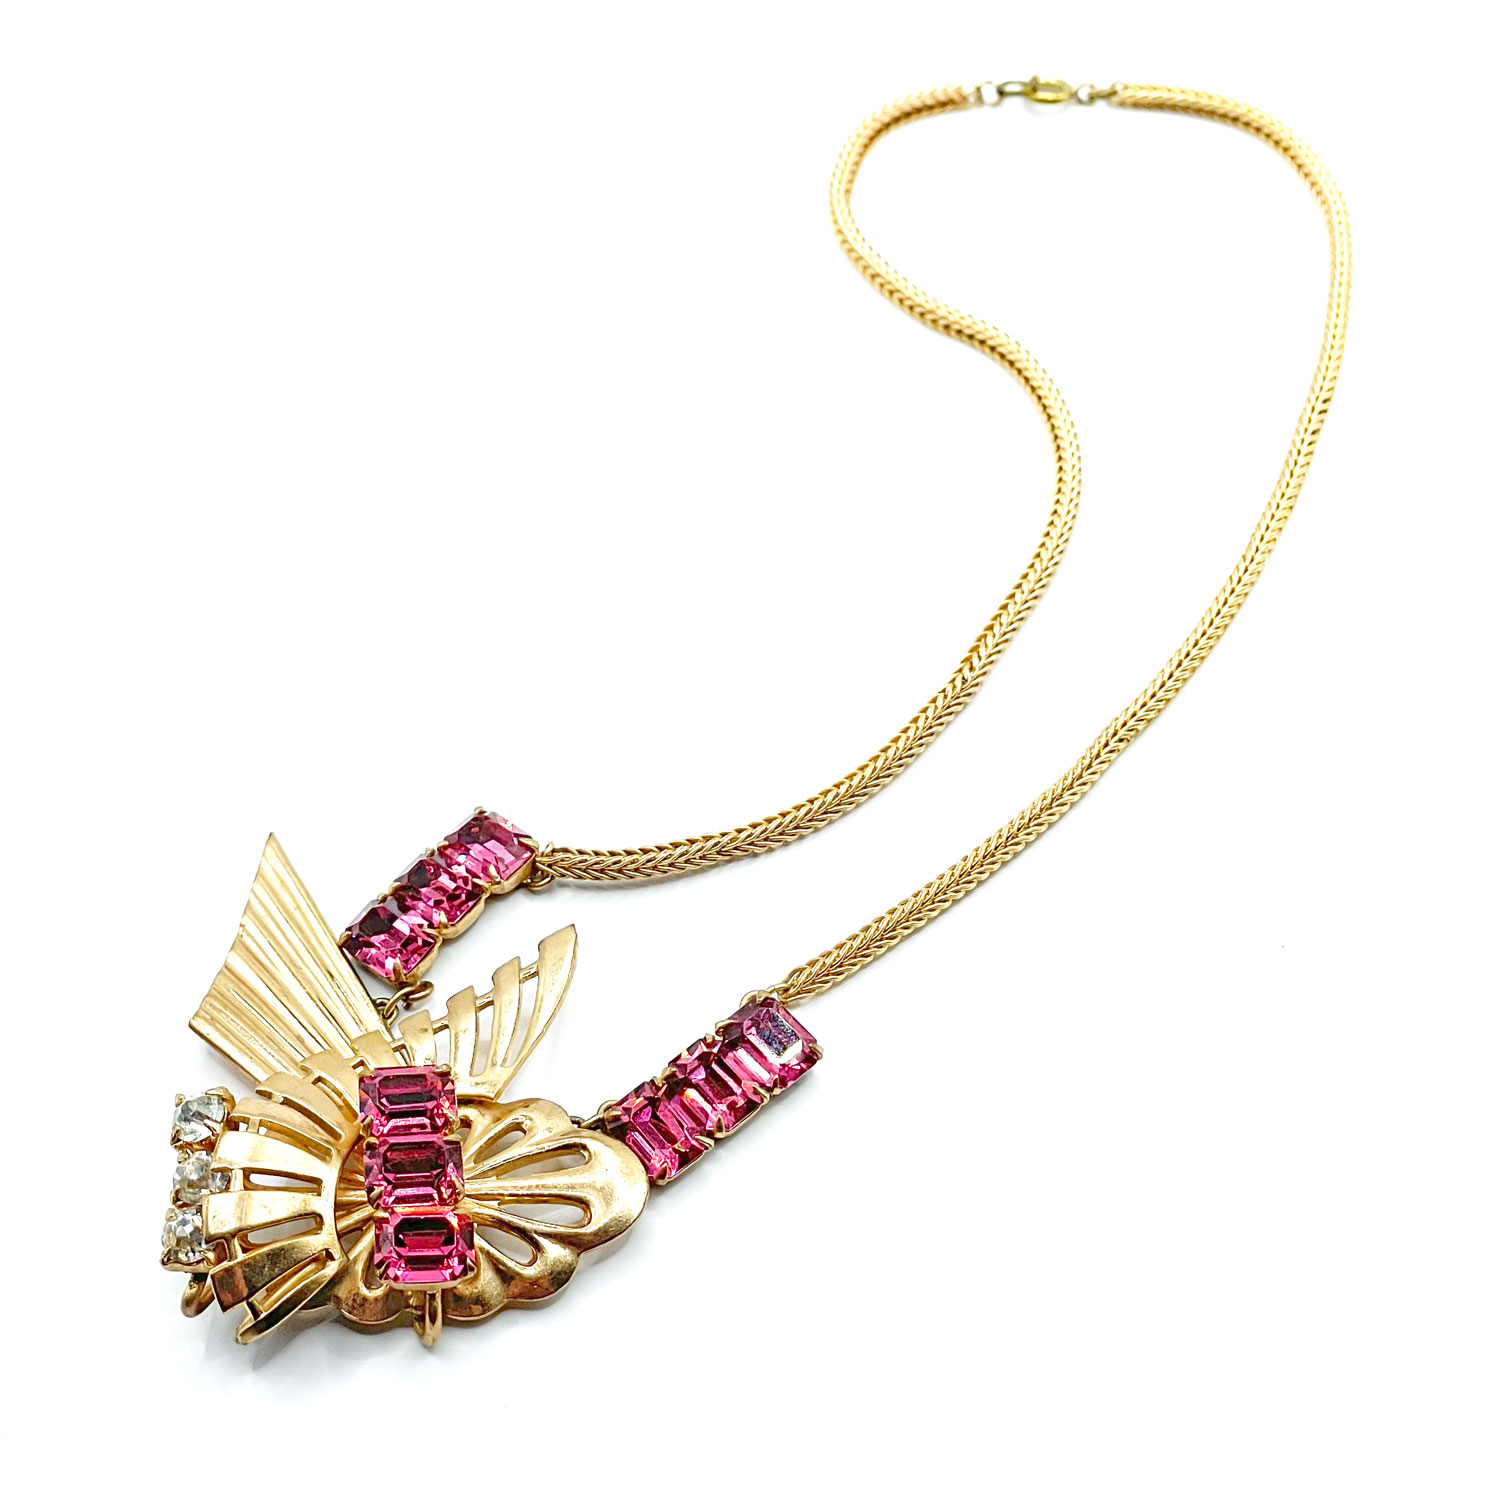 1940s pink rhinestone necklace